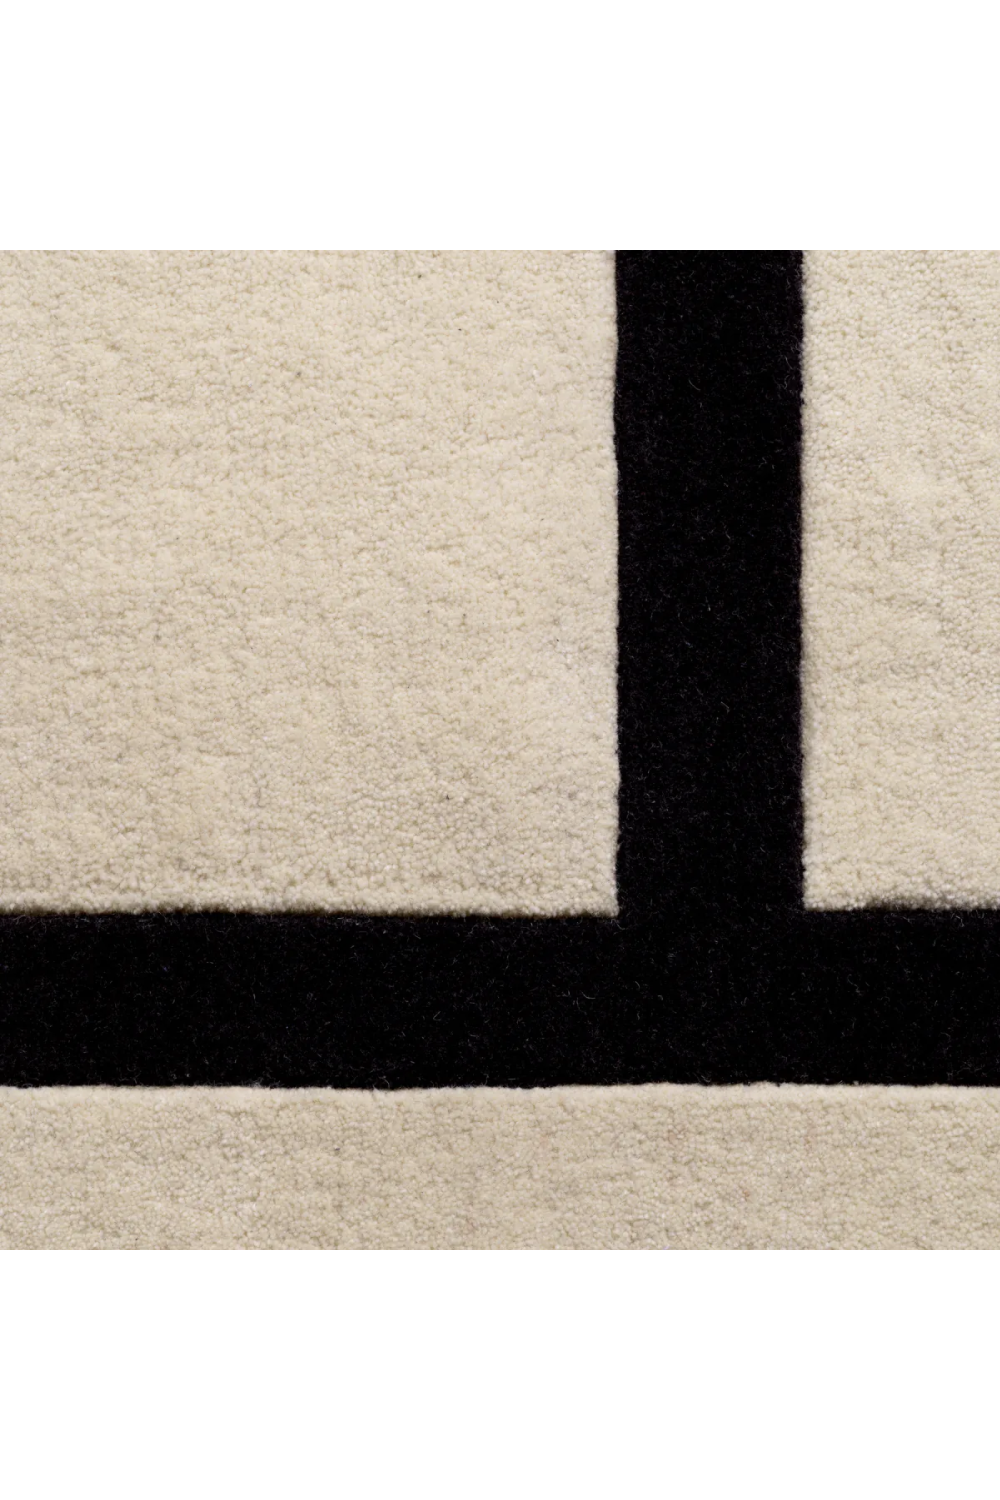 Off-White Wool Area Rug 7' x 10' | Eichholtz Omar | Oroa.com